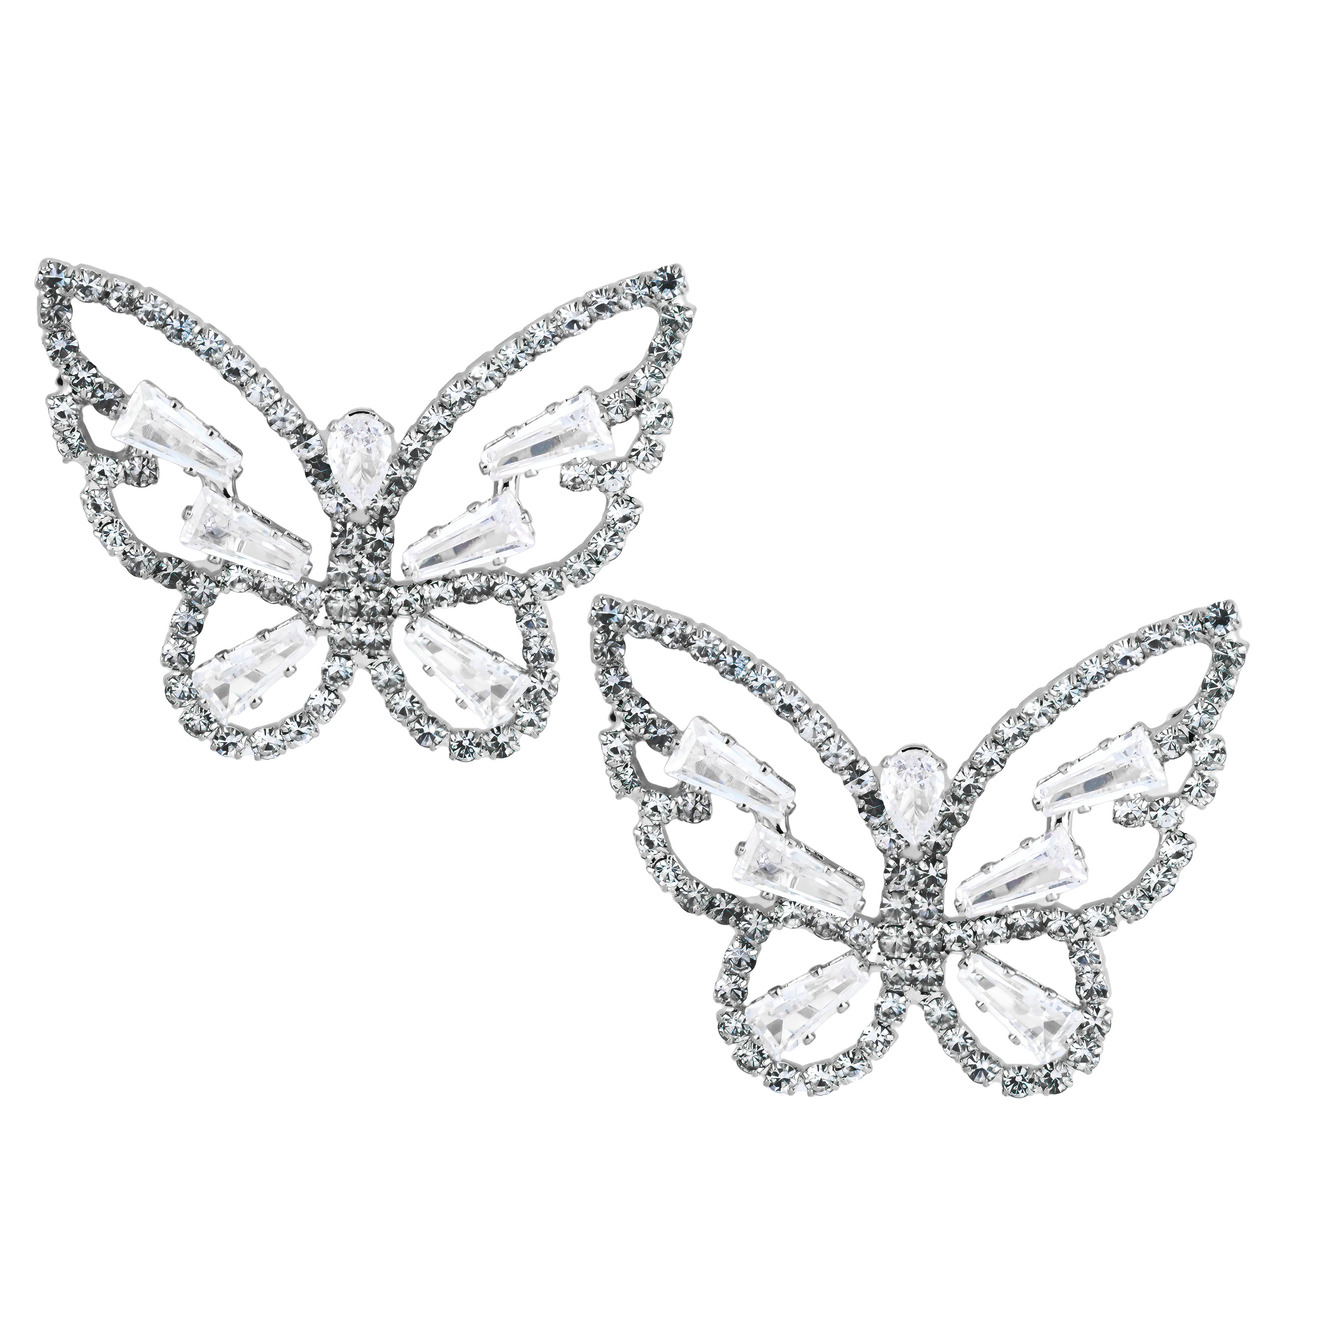 Herald Percy Серебристые серьги-бабочки с кристаллами herald percy серебристые серьги восьмигранники с кристаллами